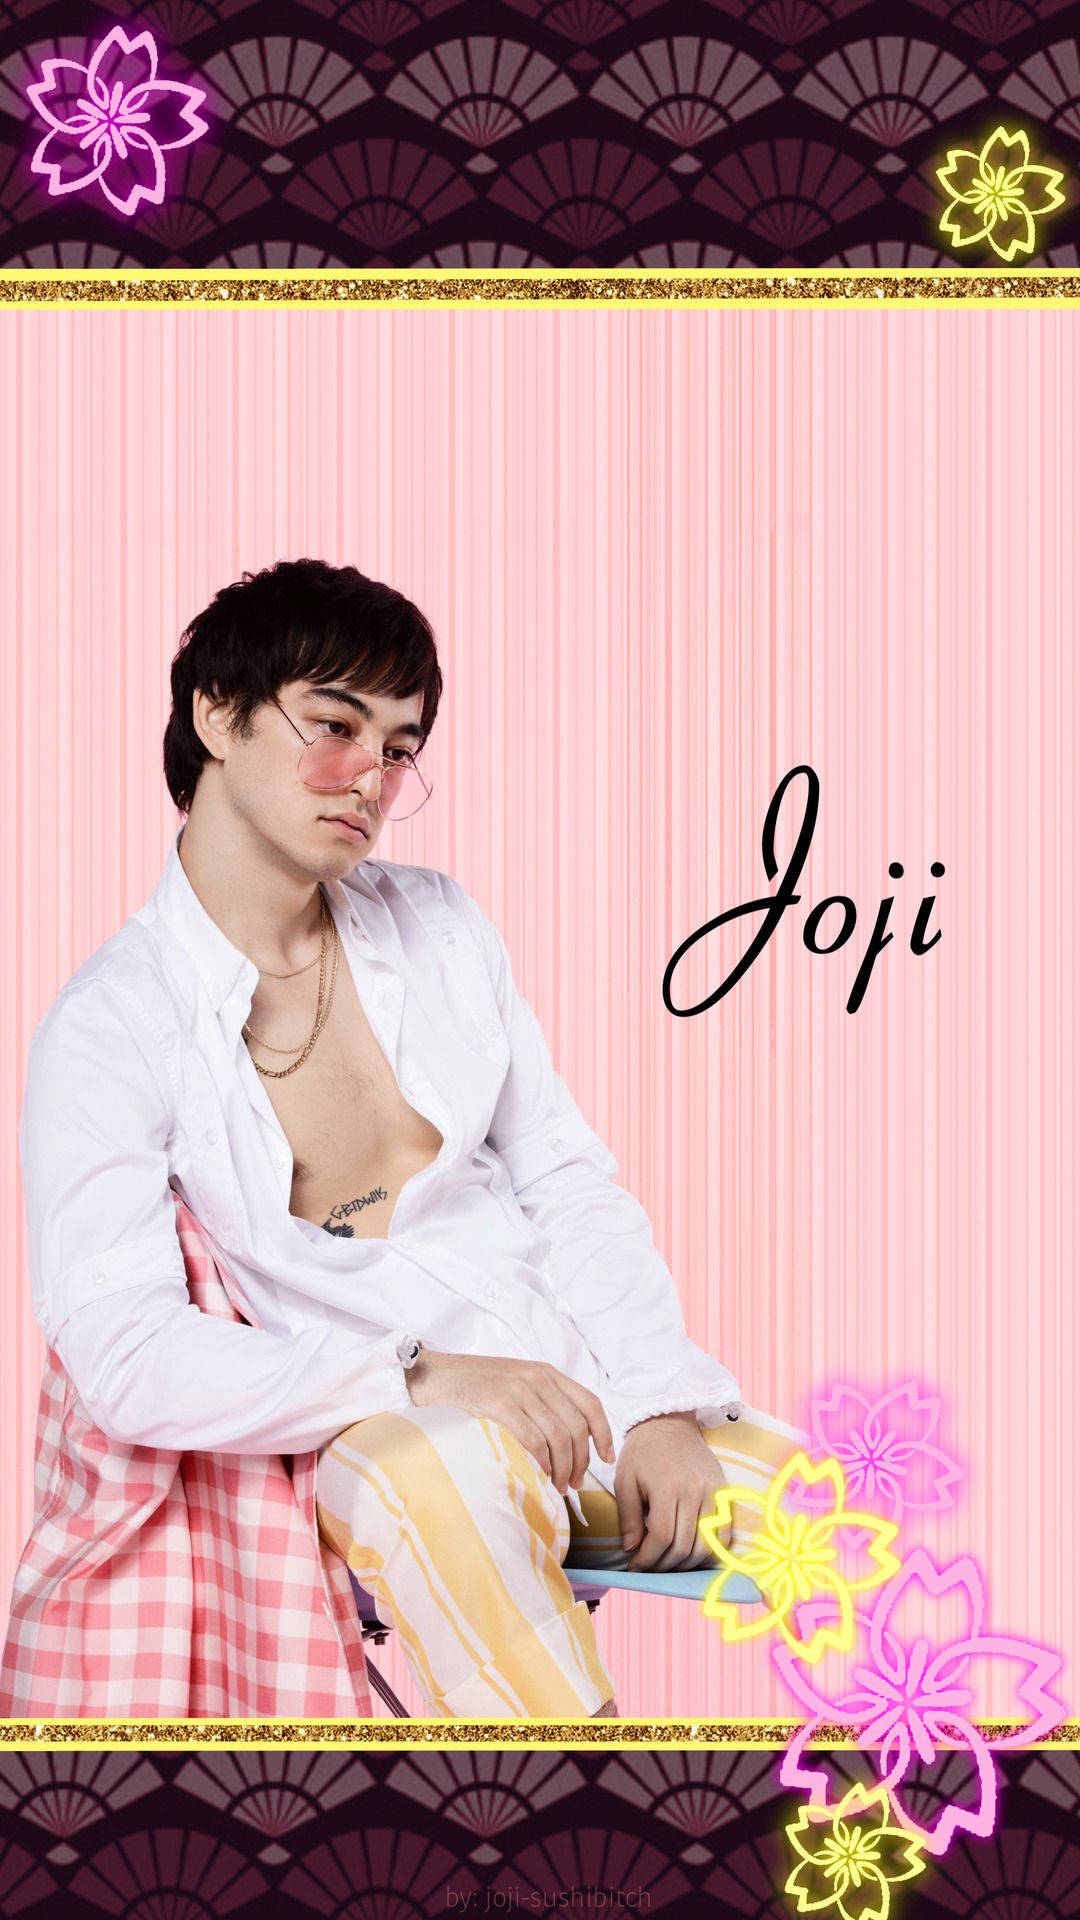 Girly Designed Poster Of Joji